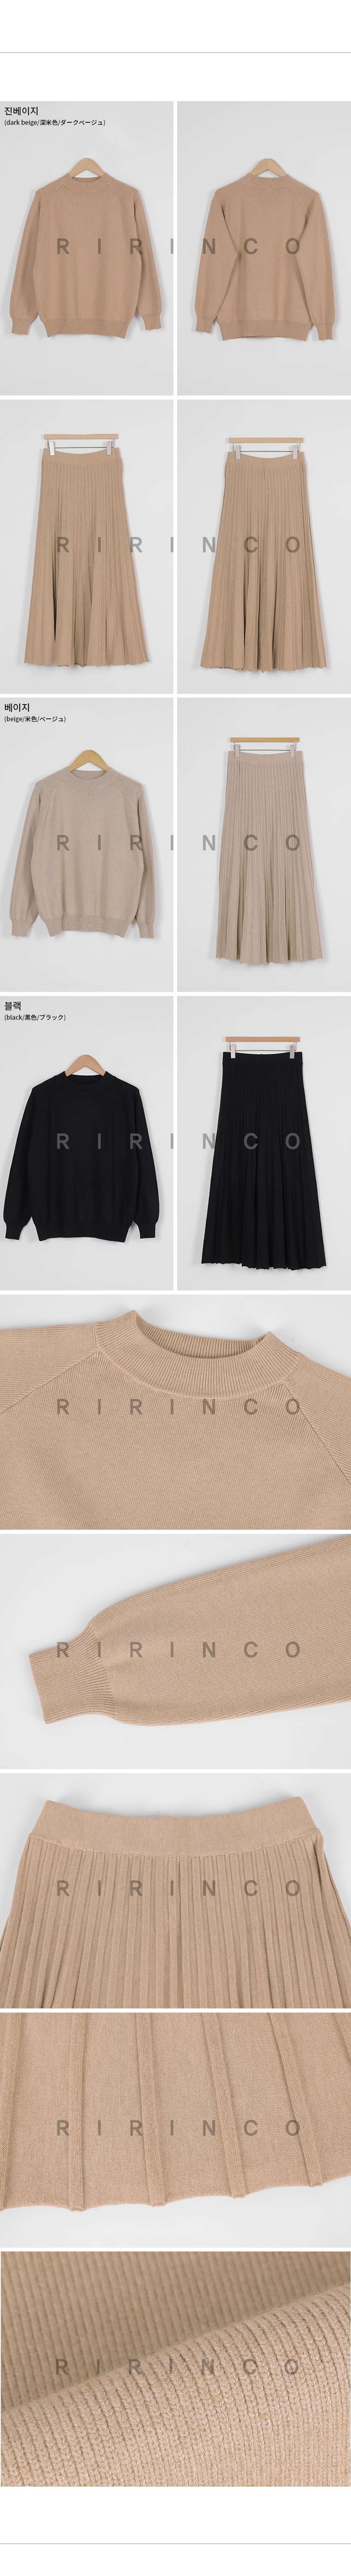 RIRINCO ニットトップス&ウエストゴムプリーツスカート上下セット